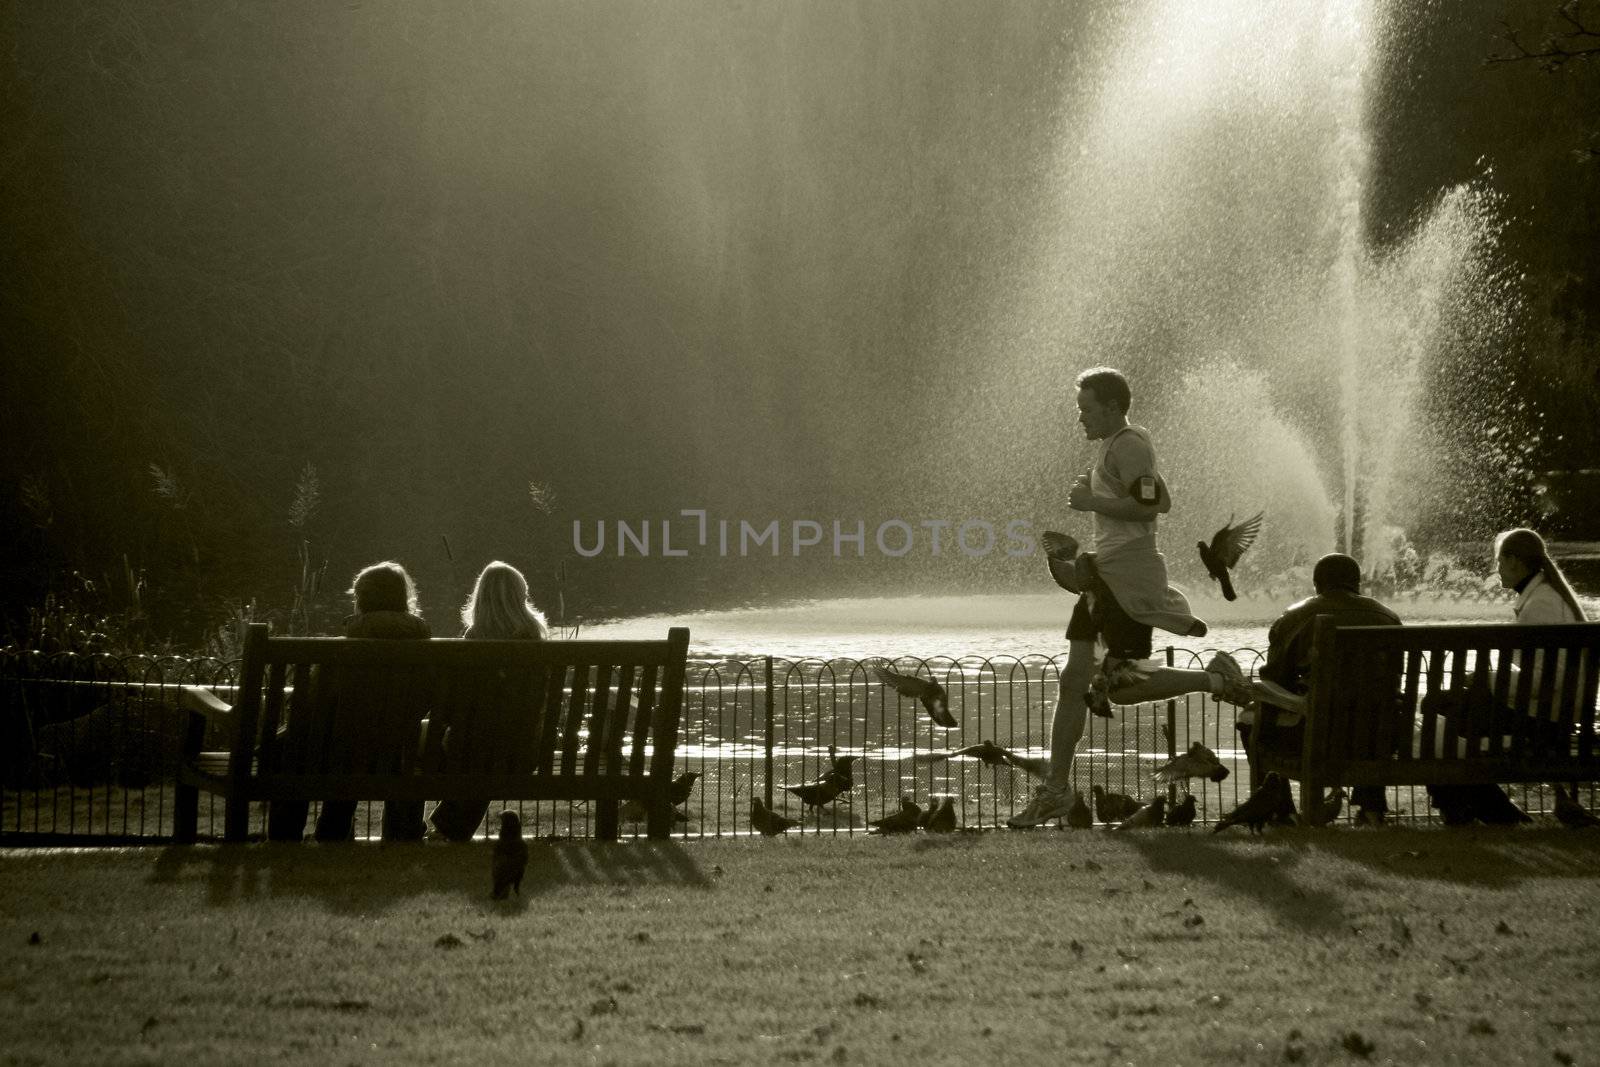 heat running in Saint James park, London, editorial use